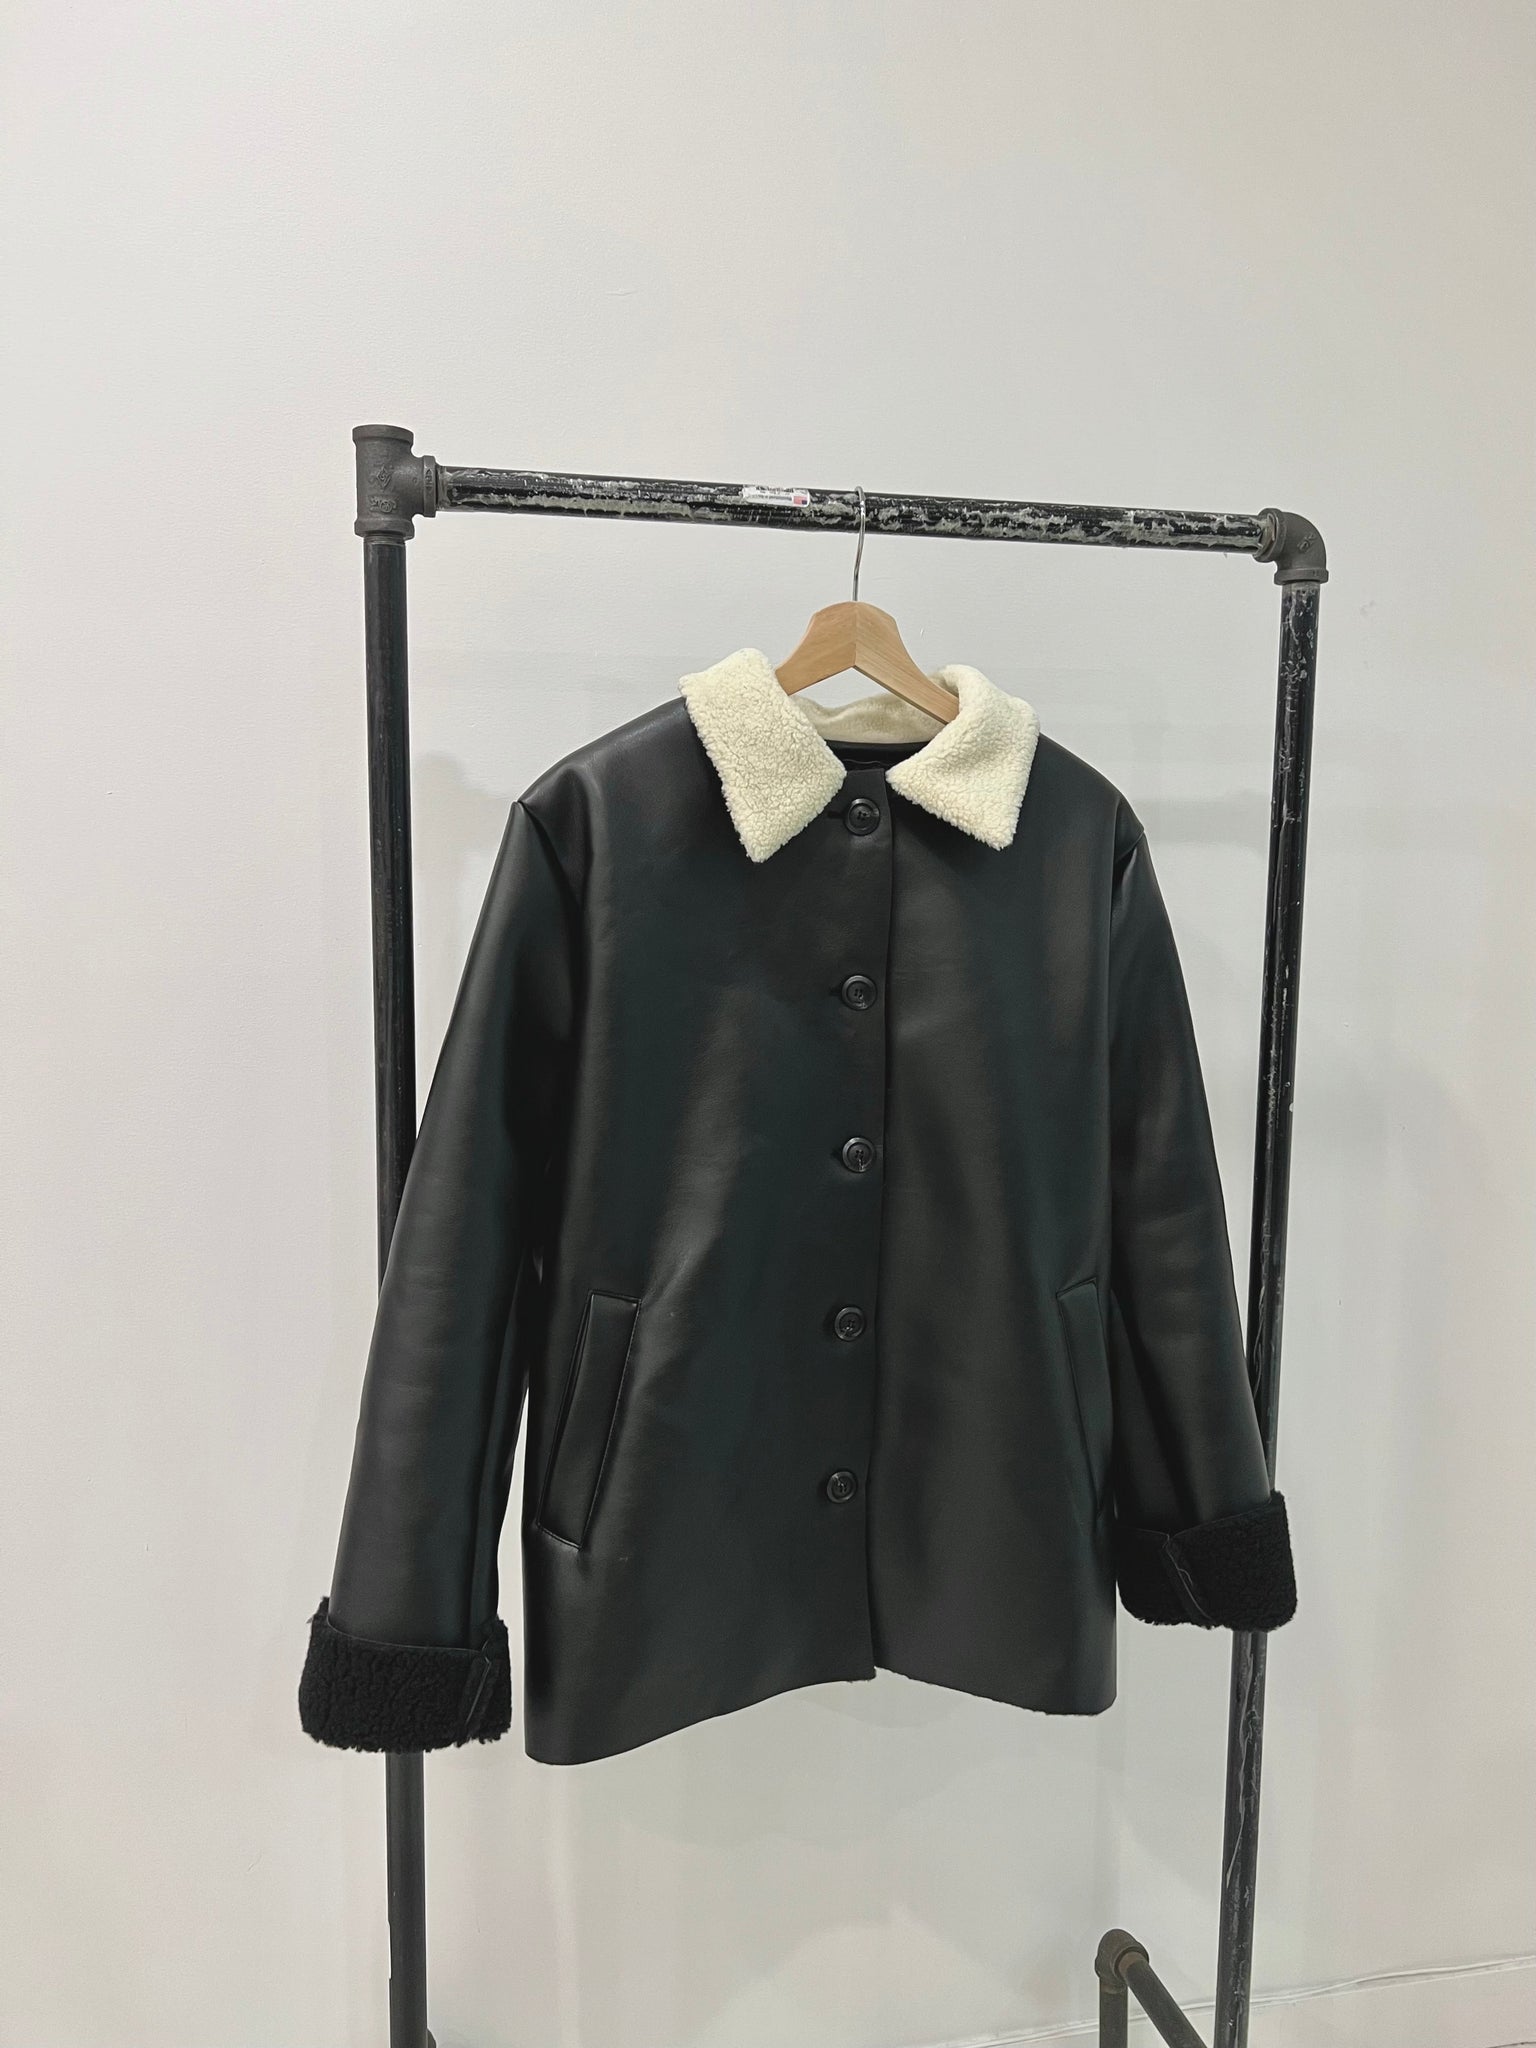 KURO shearling jacket